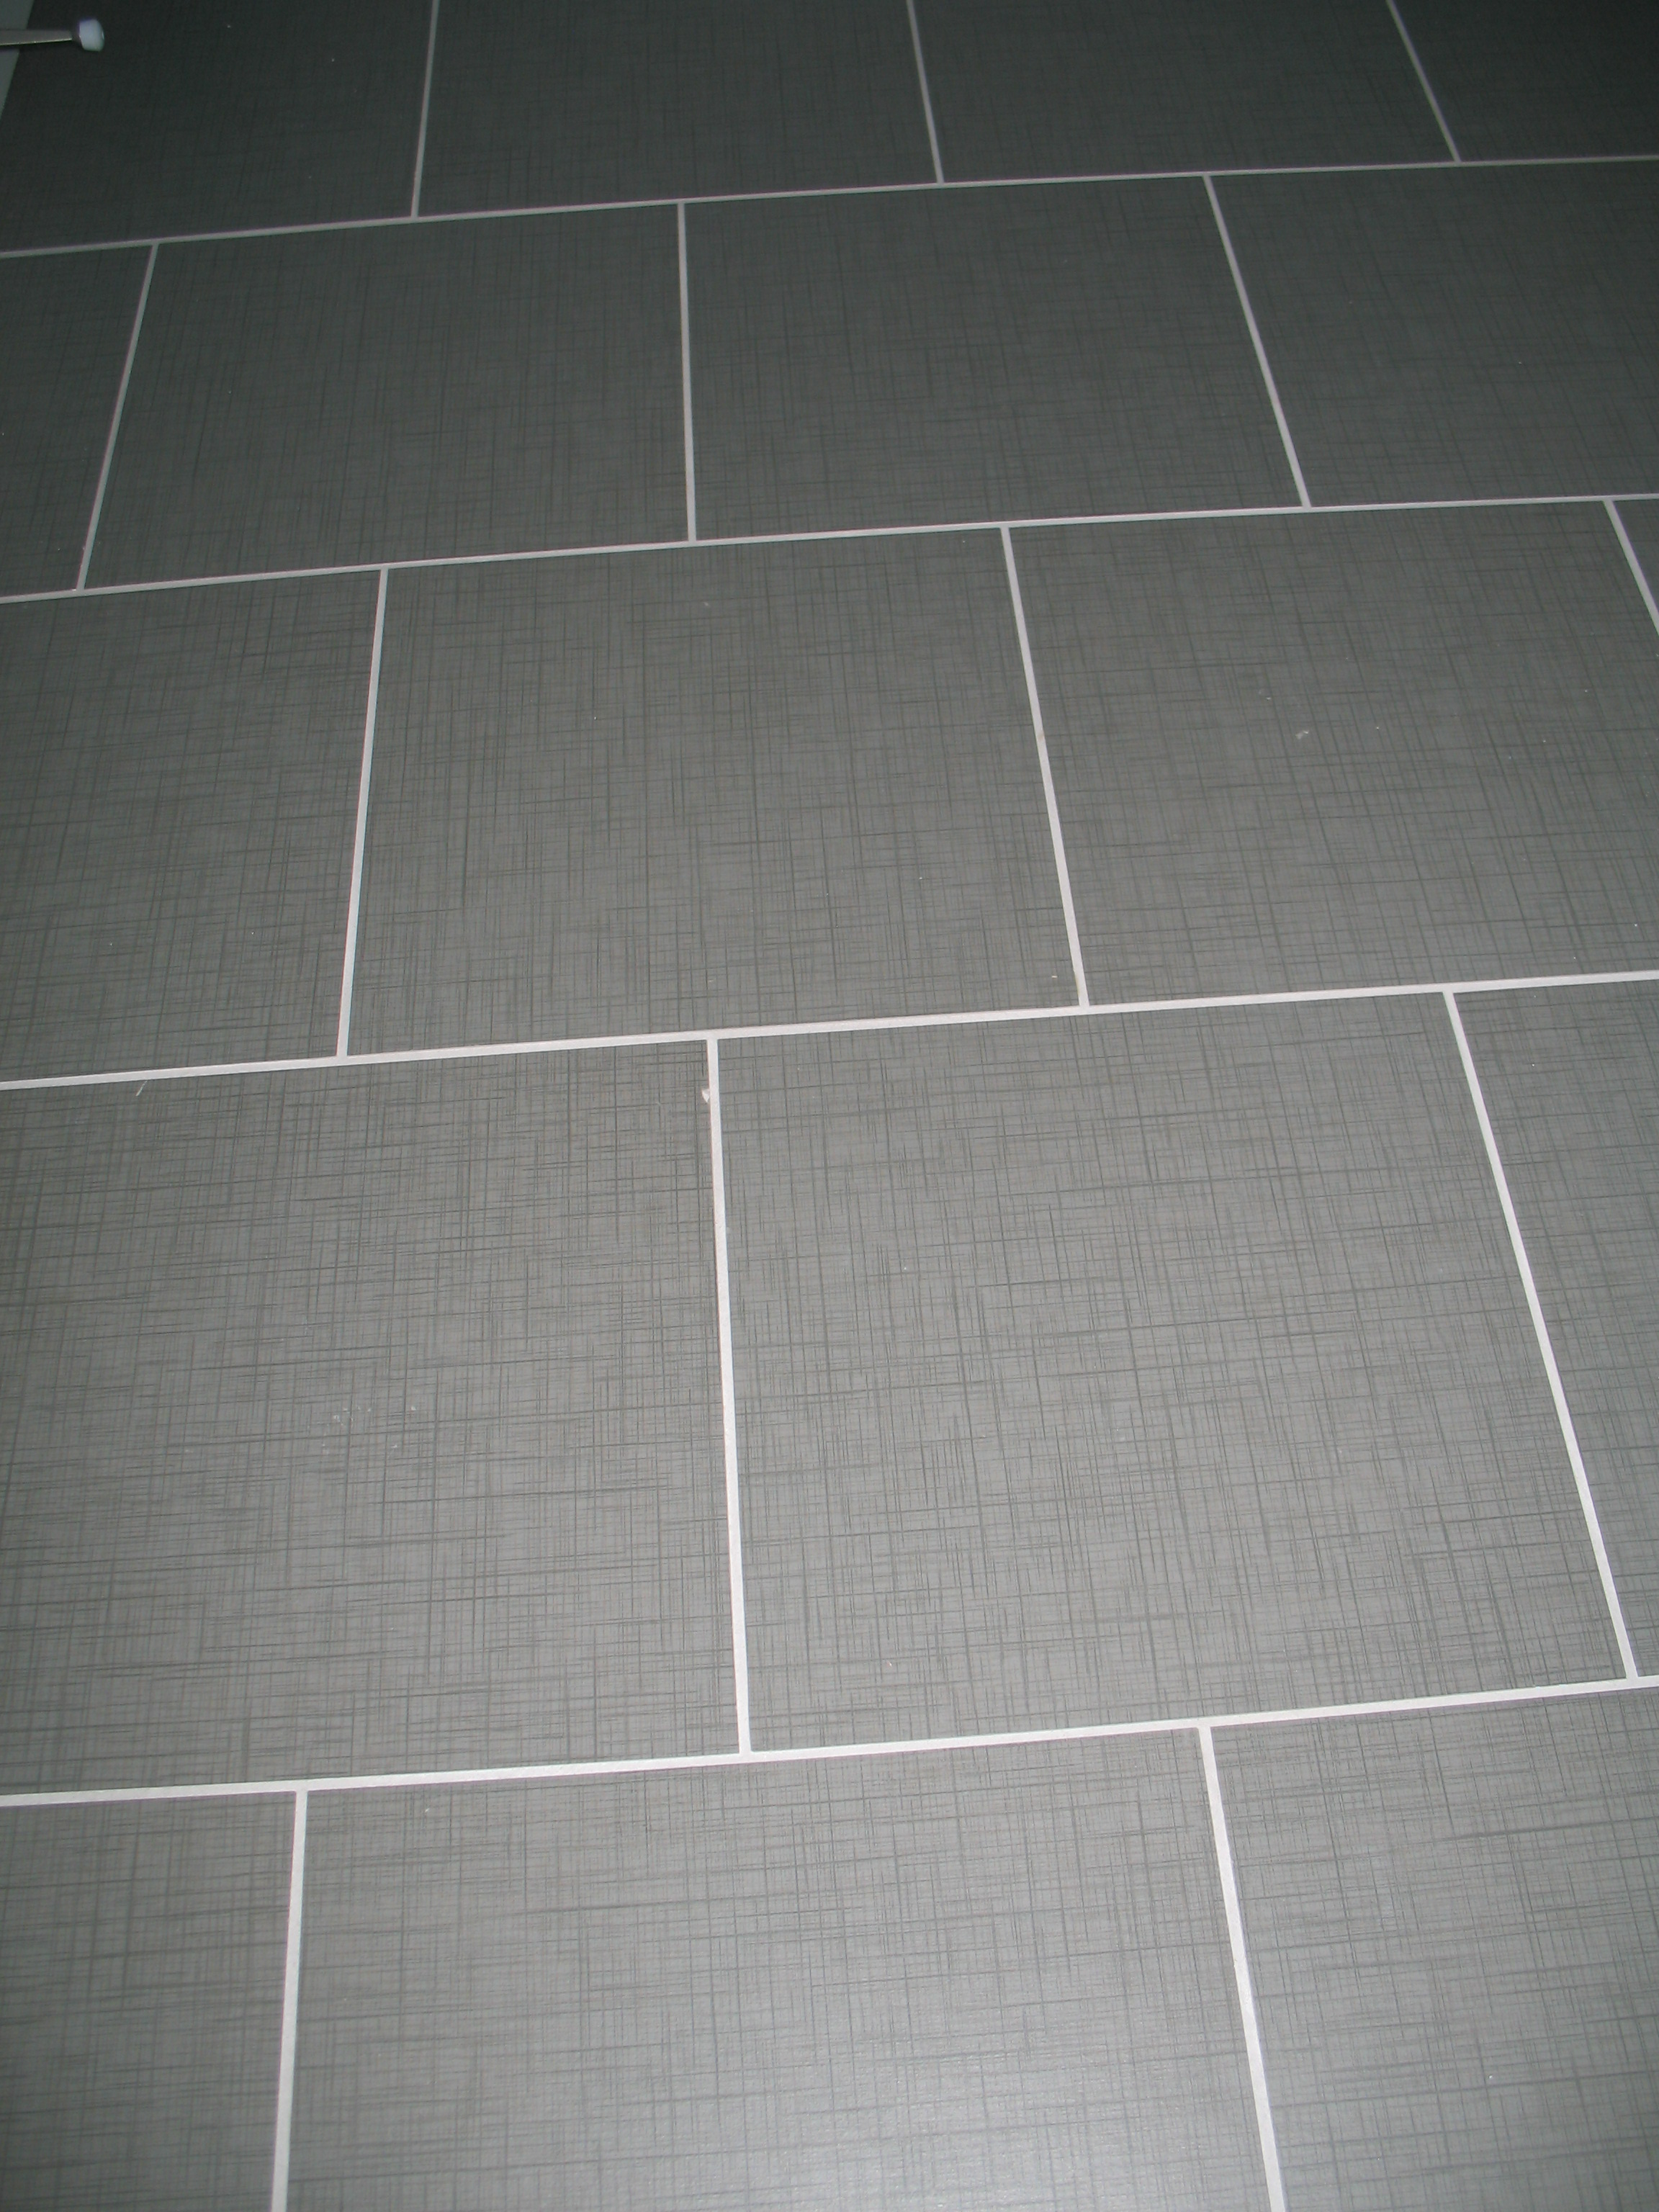 Ceramic Tile Installation B C, Floor Tile Laying Designs